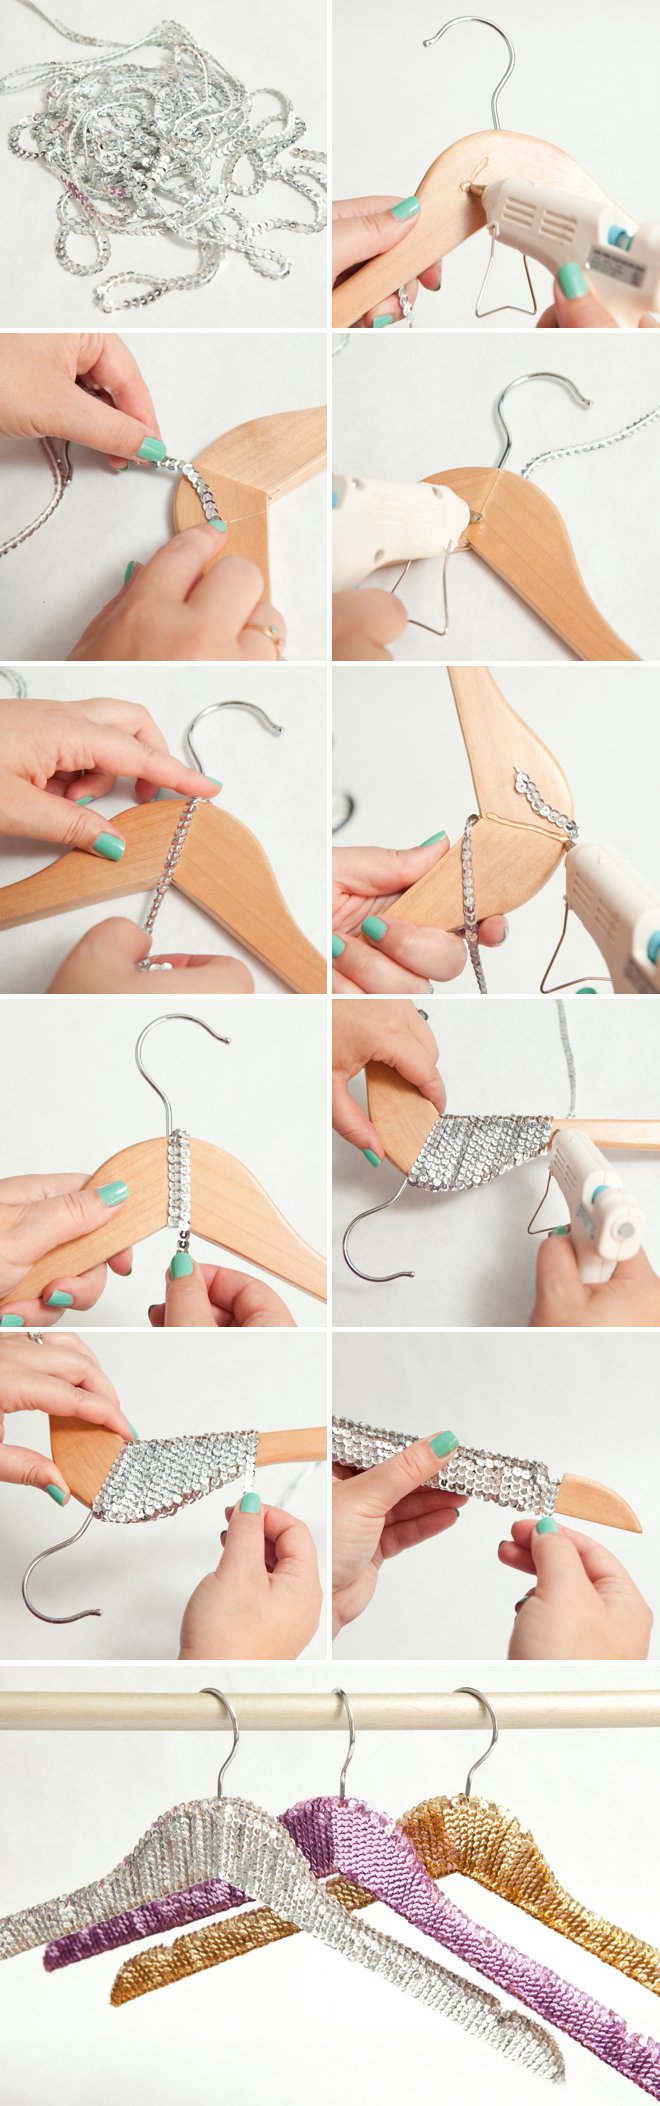 DIY Sequins Clothes Hanger Tutorial